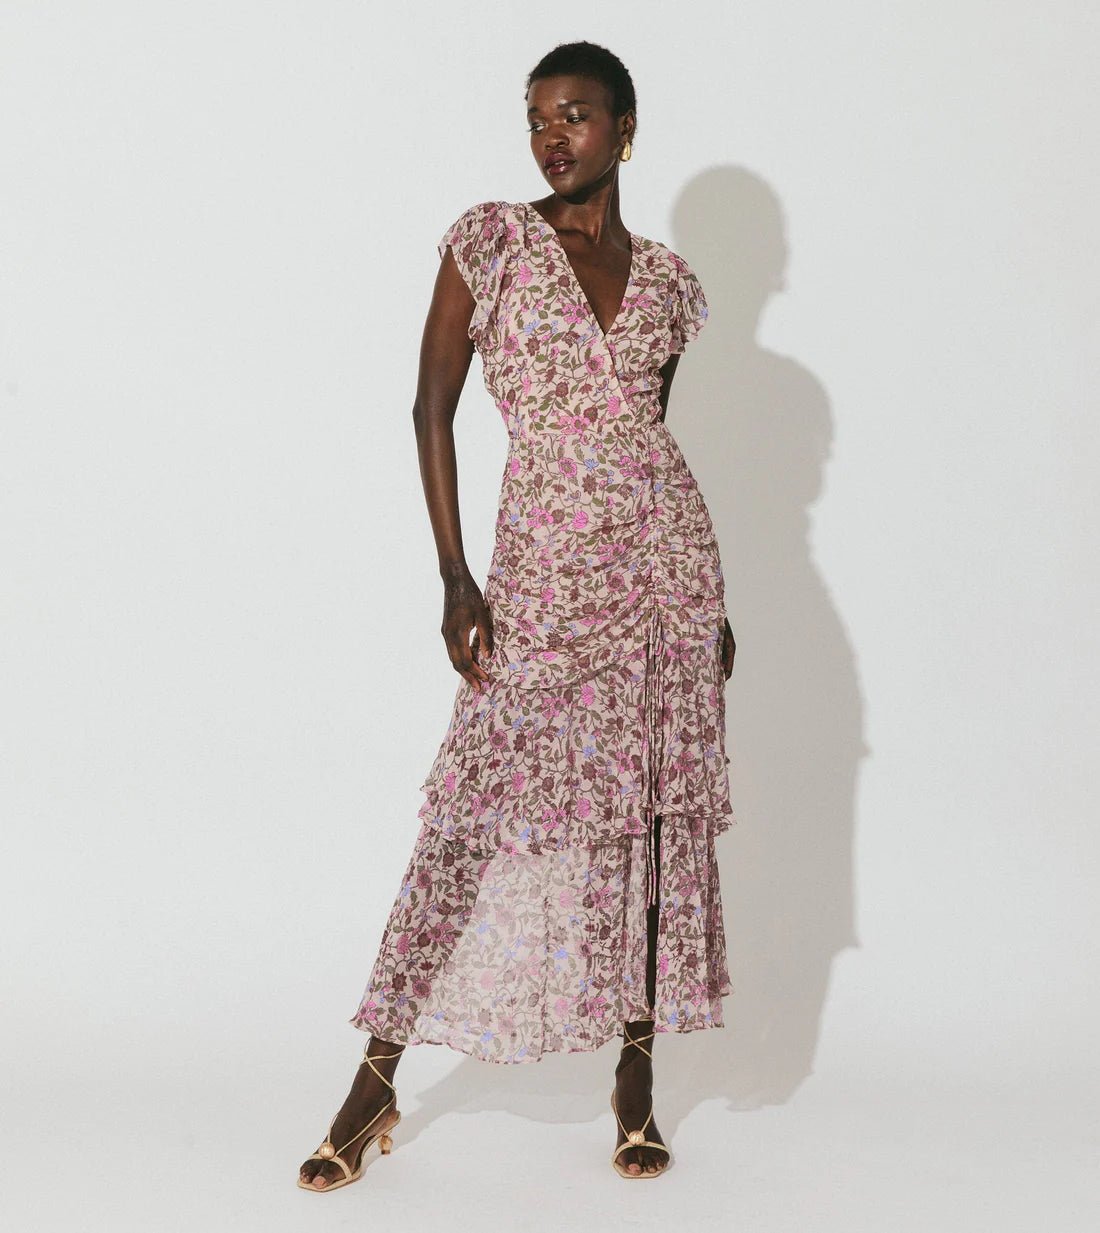 Cleobella Bryce Ankle Dress in Kaia Print - Estilo Boutique